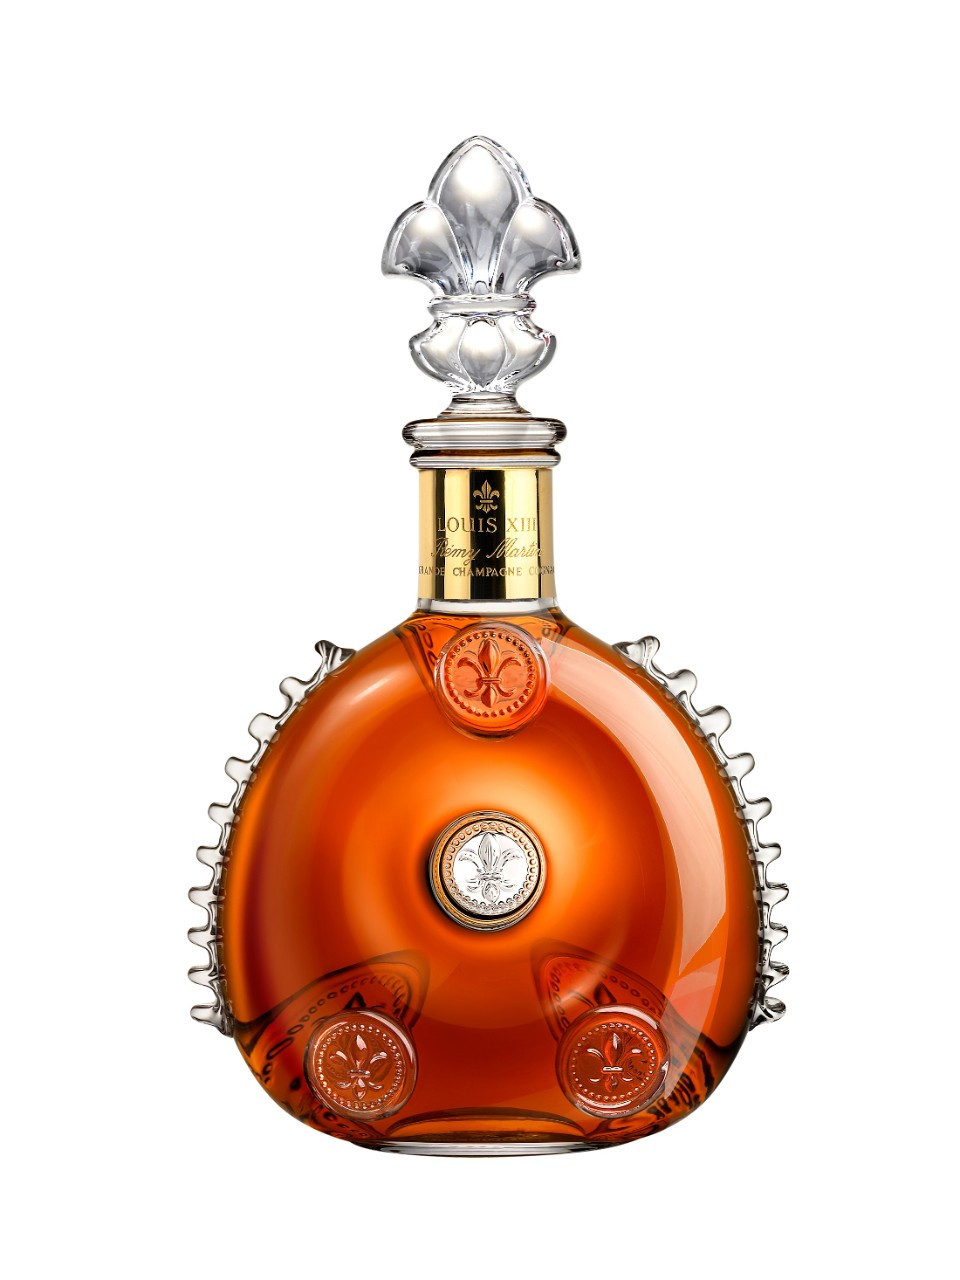 Rémy martin louis xiii cognac  700 ml bottle